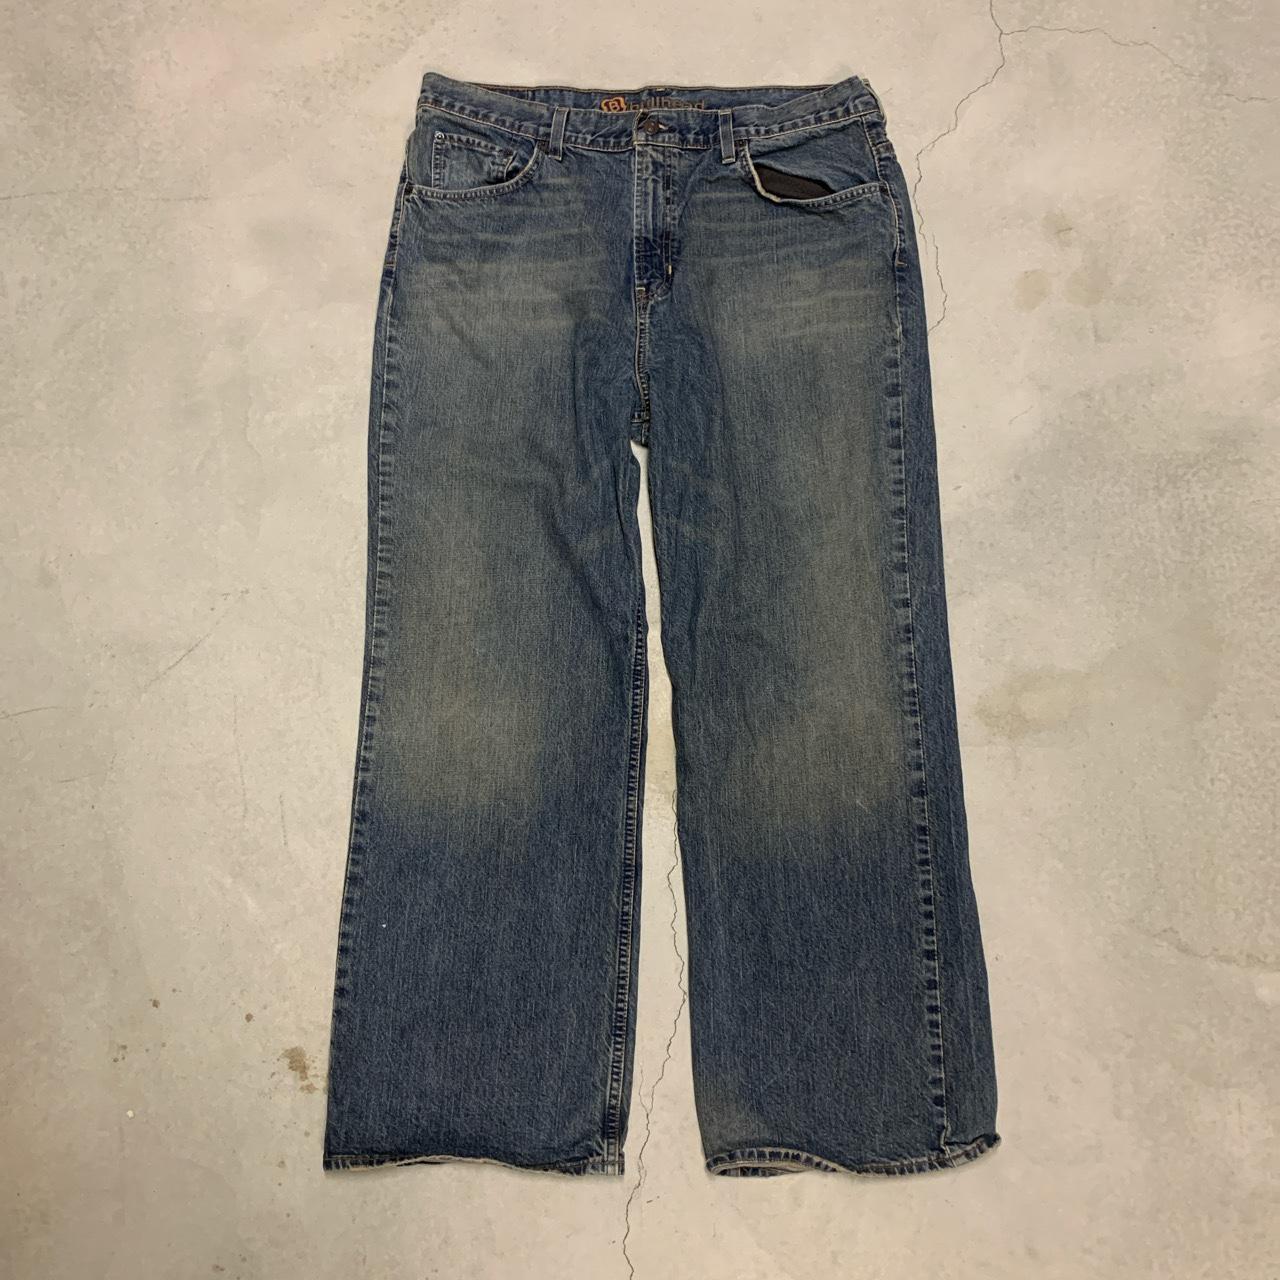 Baggy Bullhead Jeans (36W X 30L) Details--Nice... - Depop